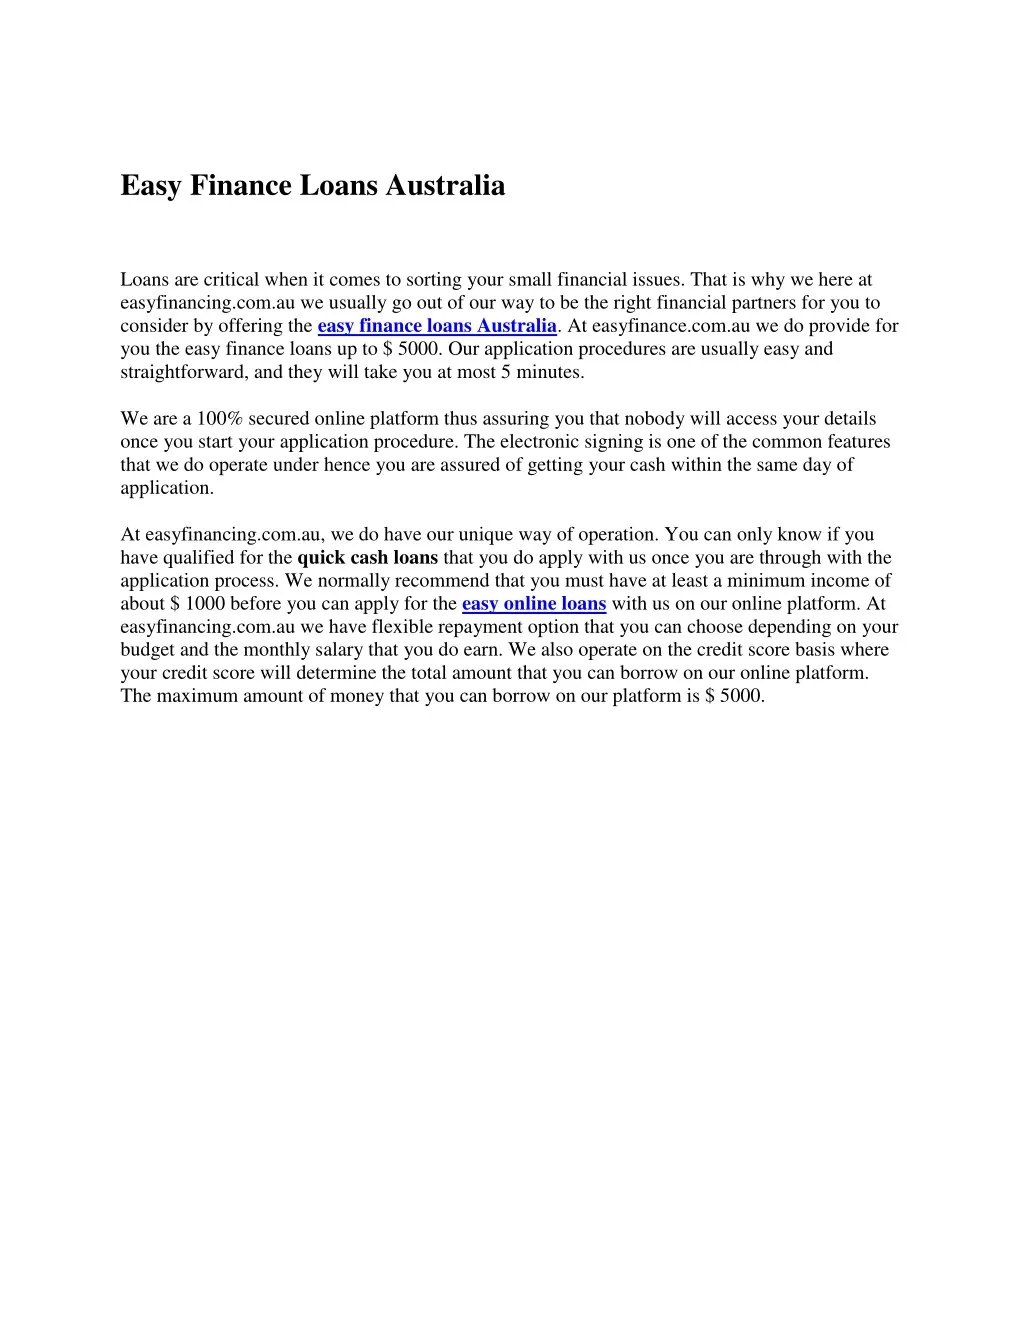 easy finance loans australia